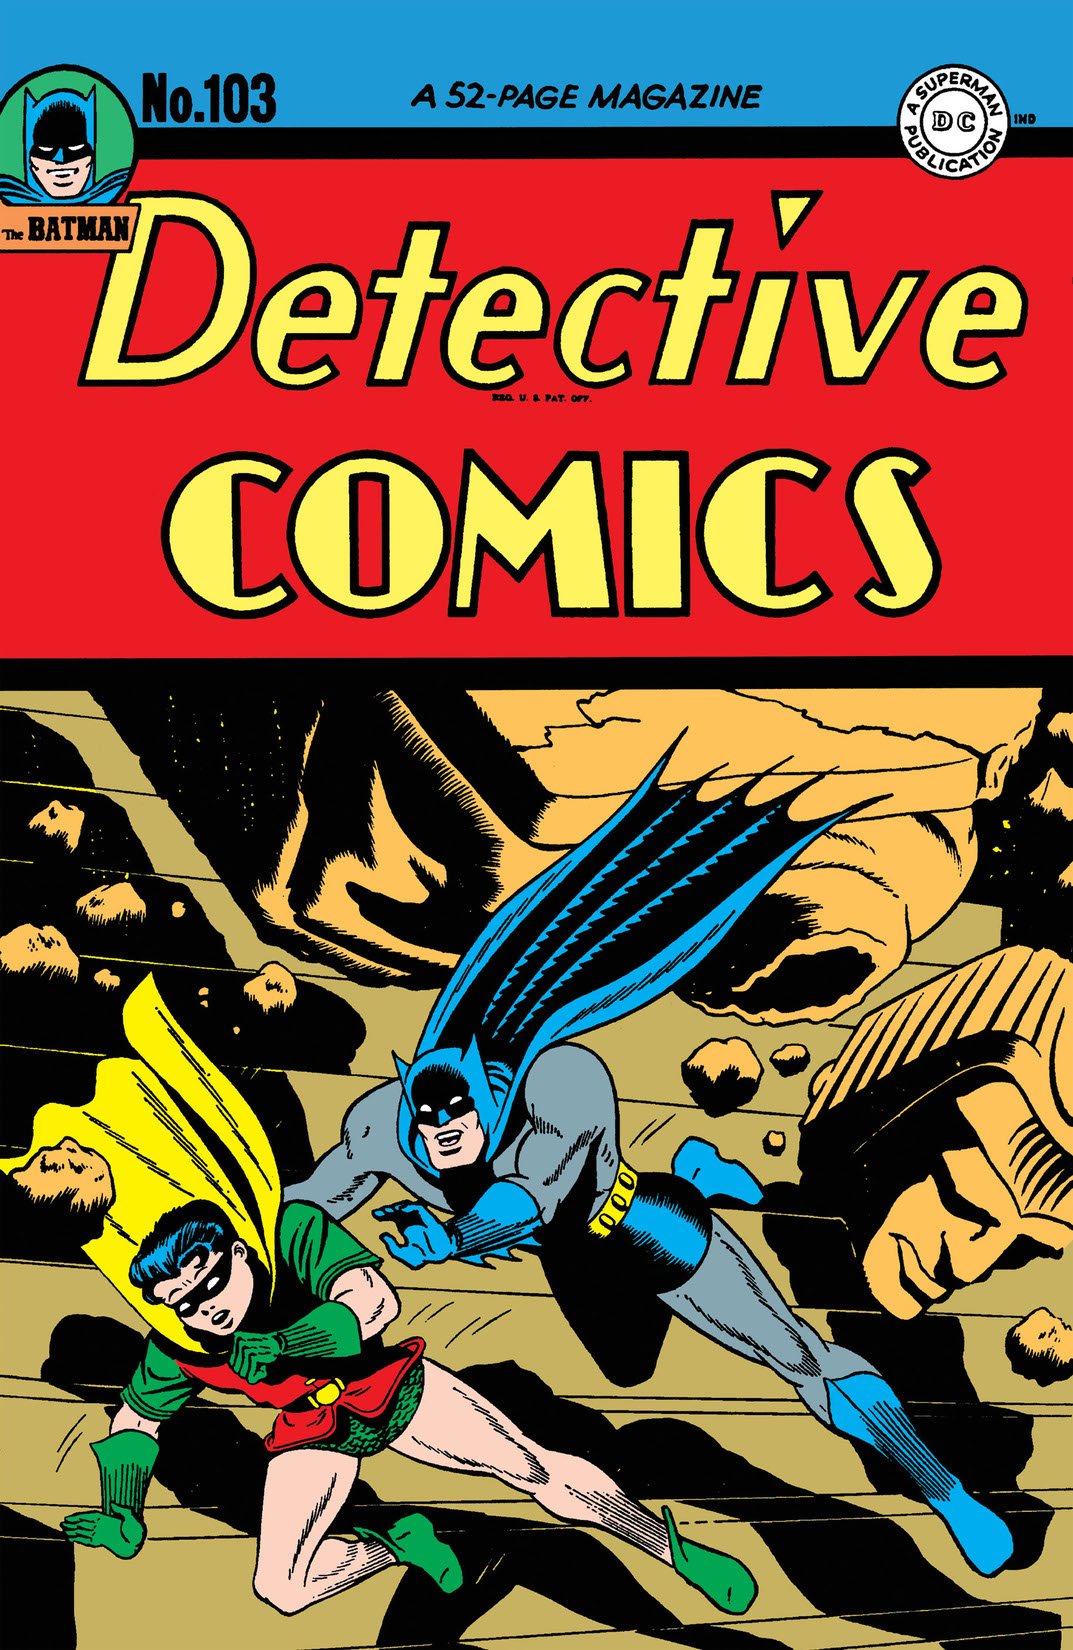 Detective Comics (1937-) #103 preview images